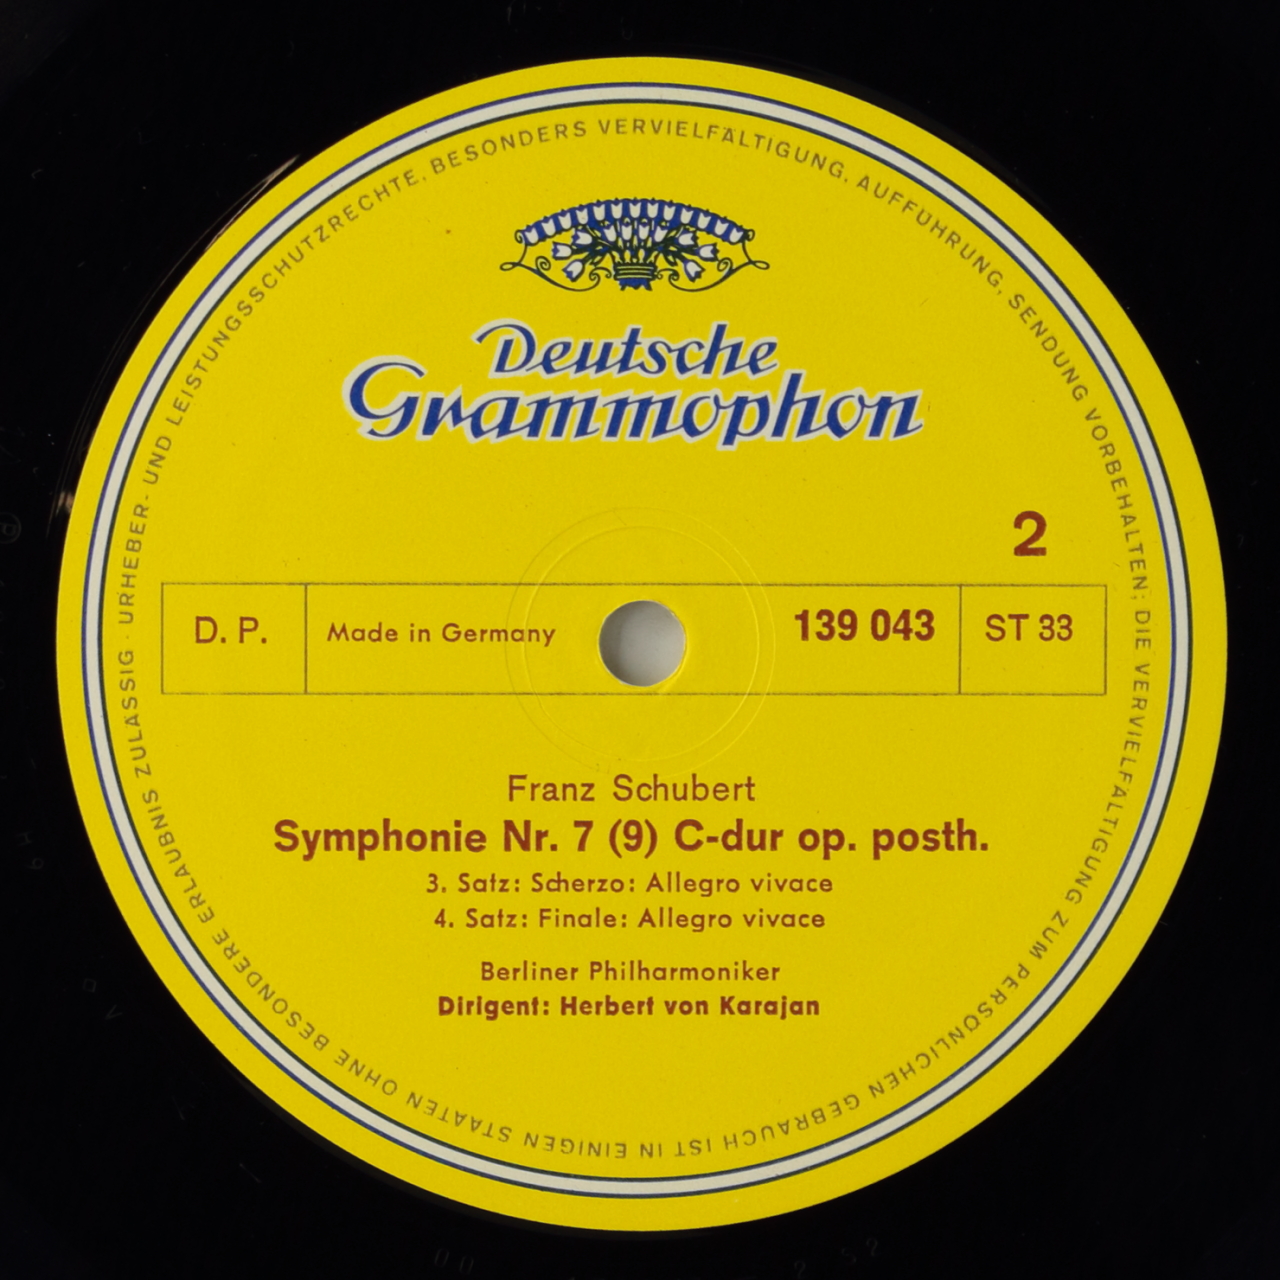 Schubert: Symphonie Nr. 7 (9)